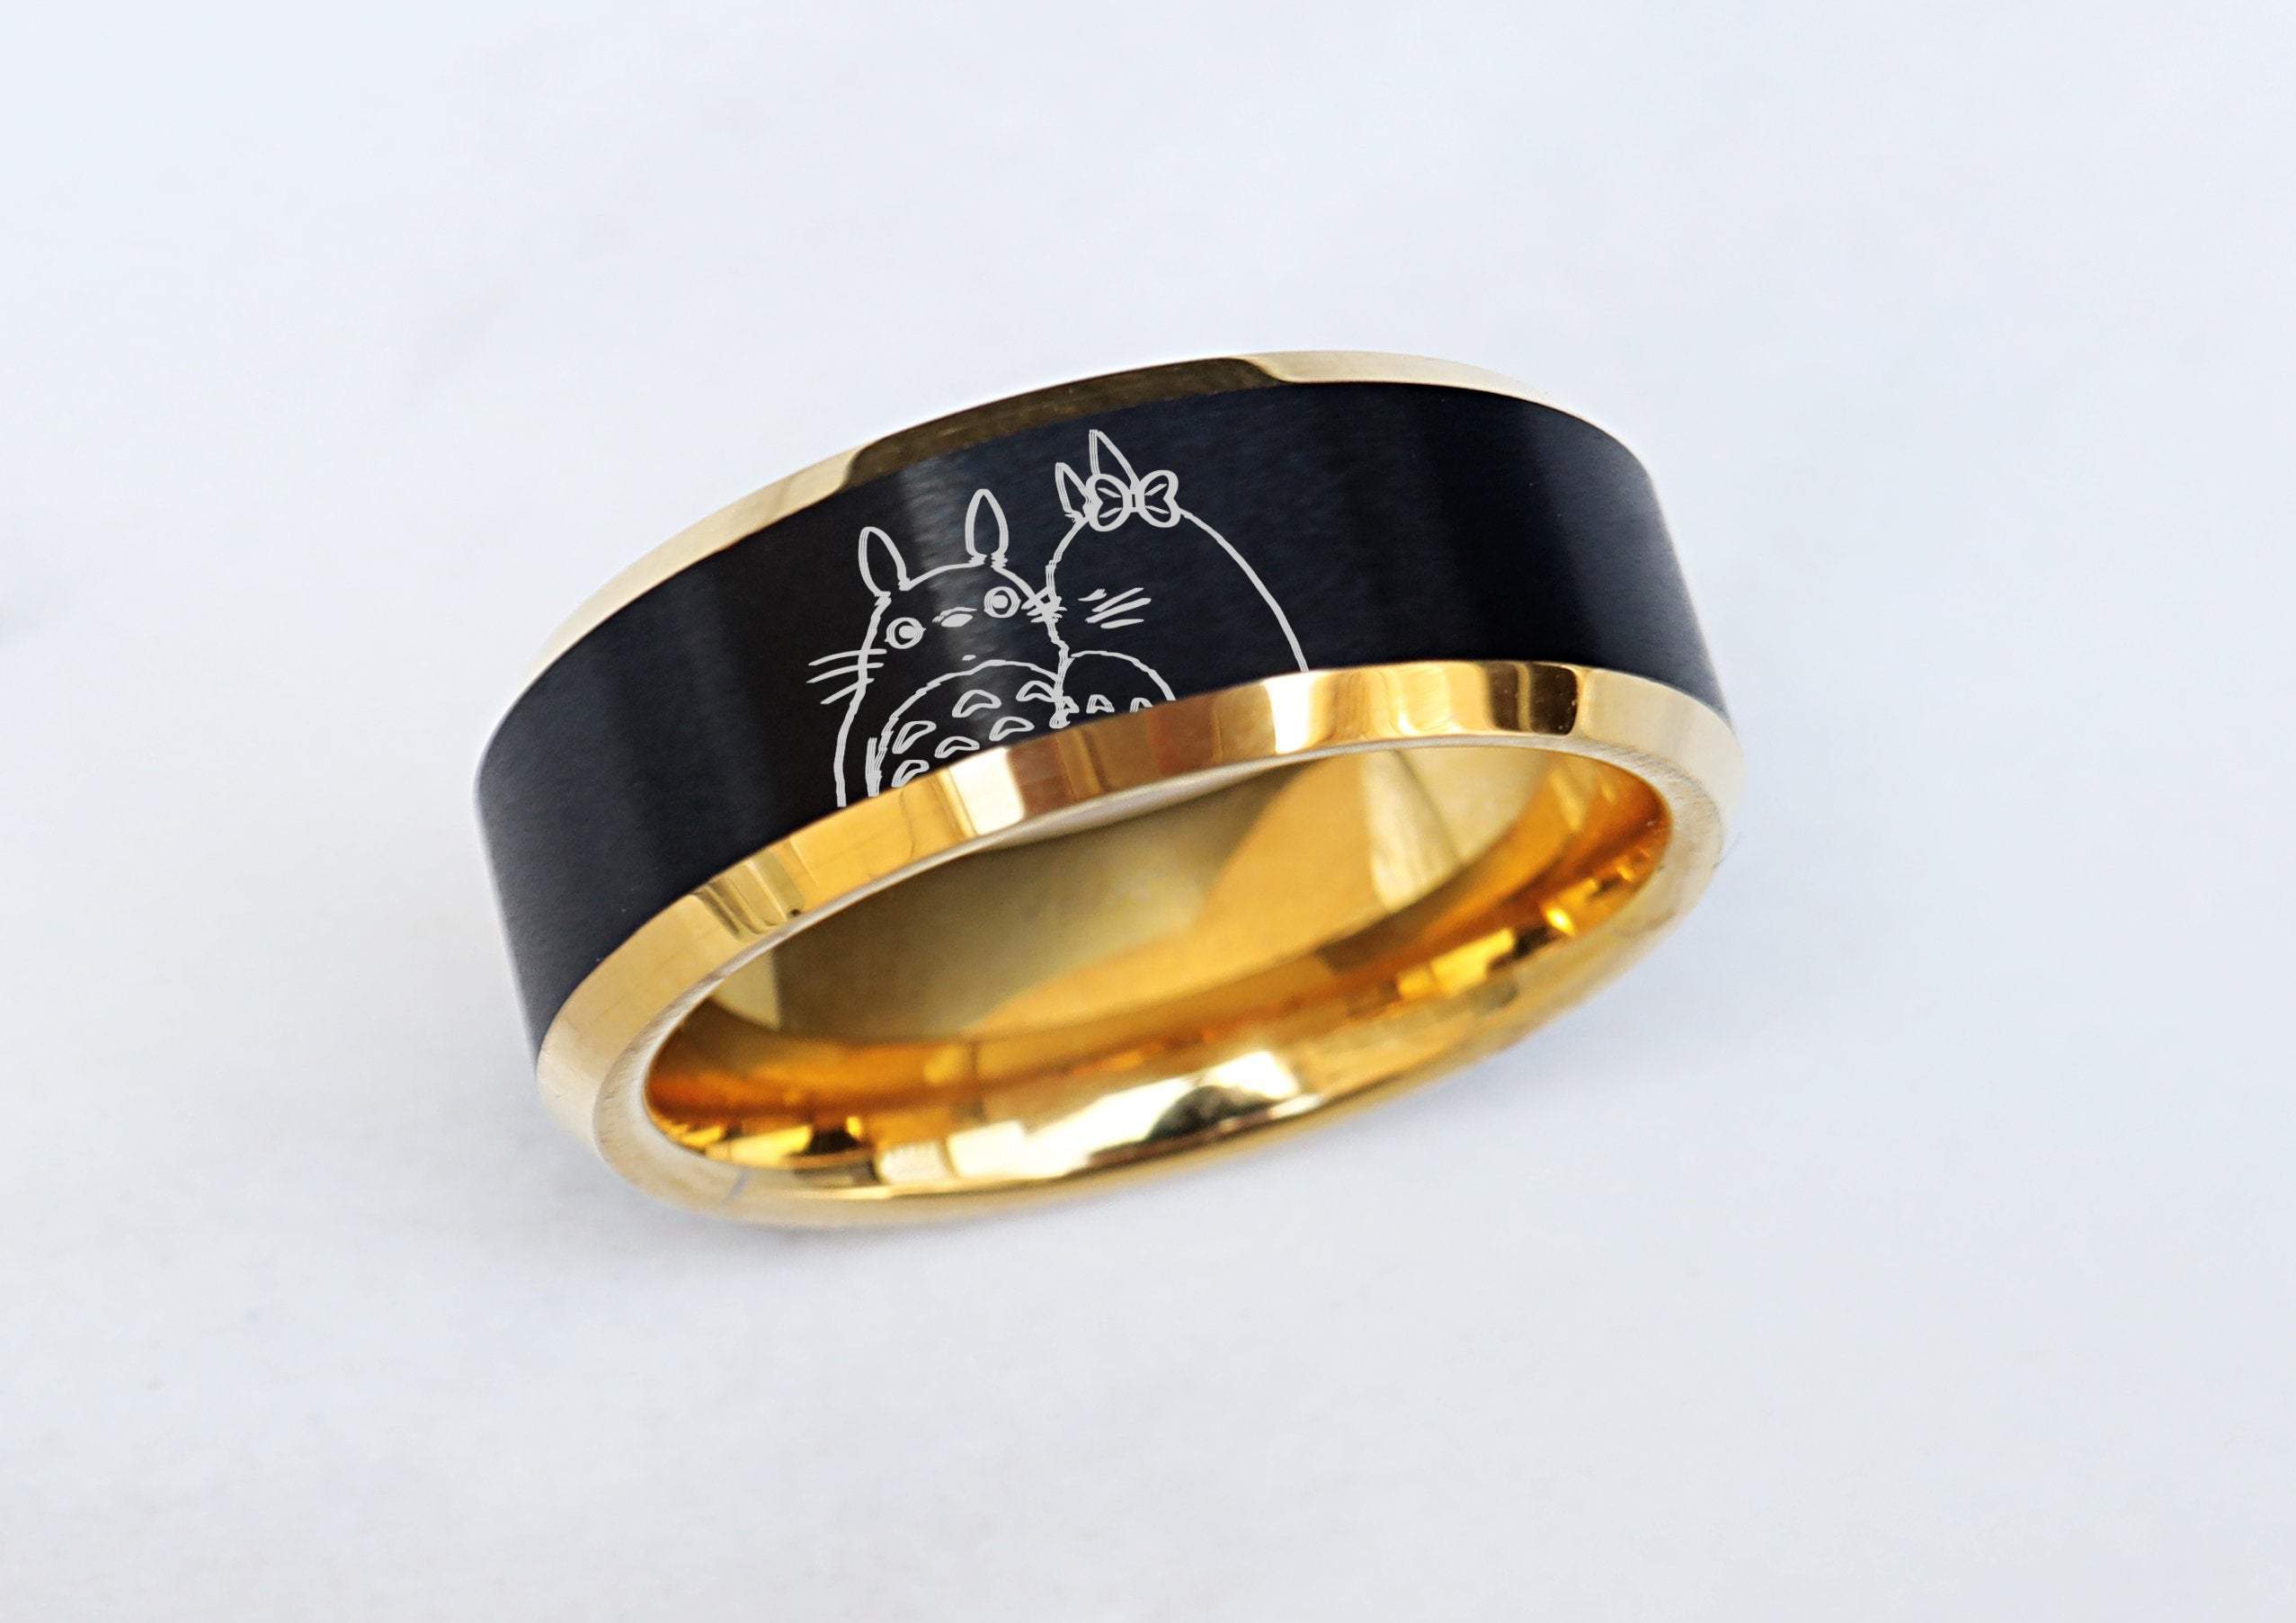 Totoro Love Wedding Ring, Studio Ghibli Wedding Band, Anime Kawaii Eng